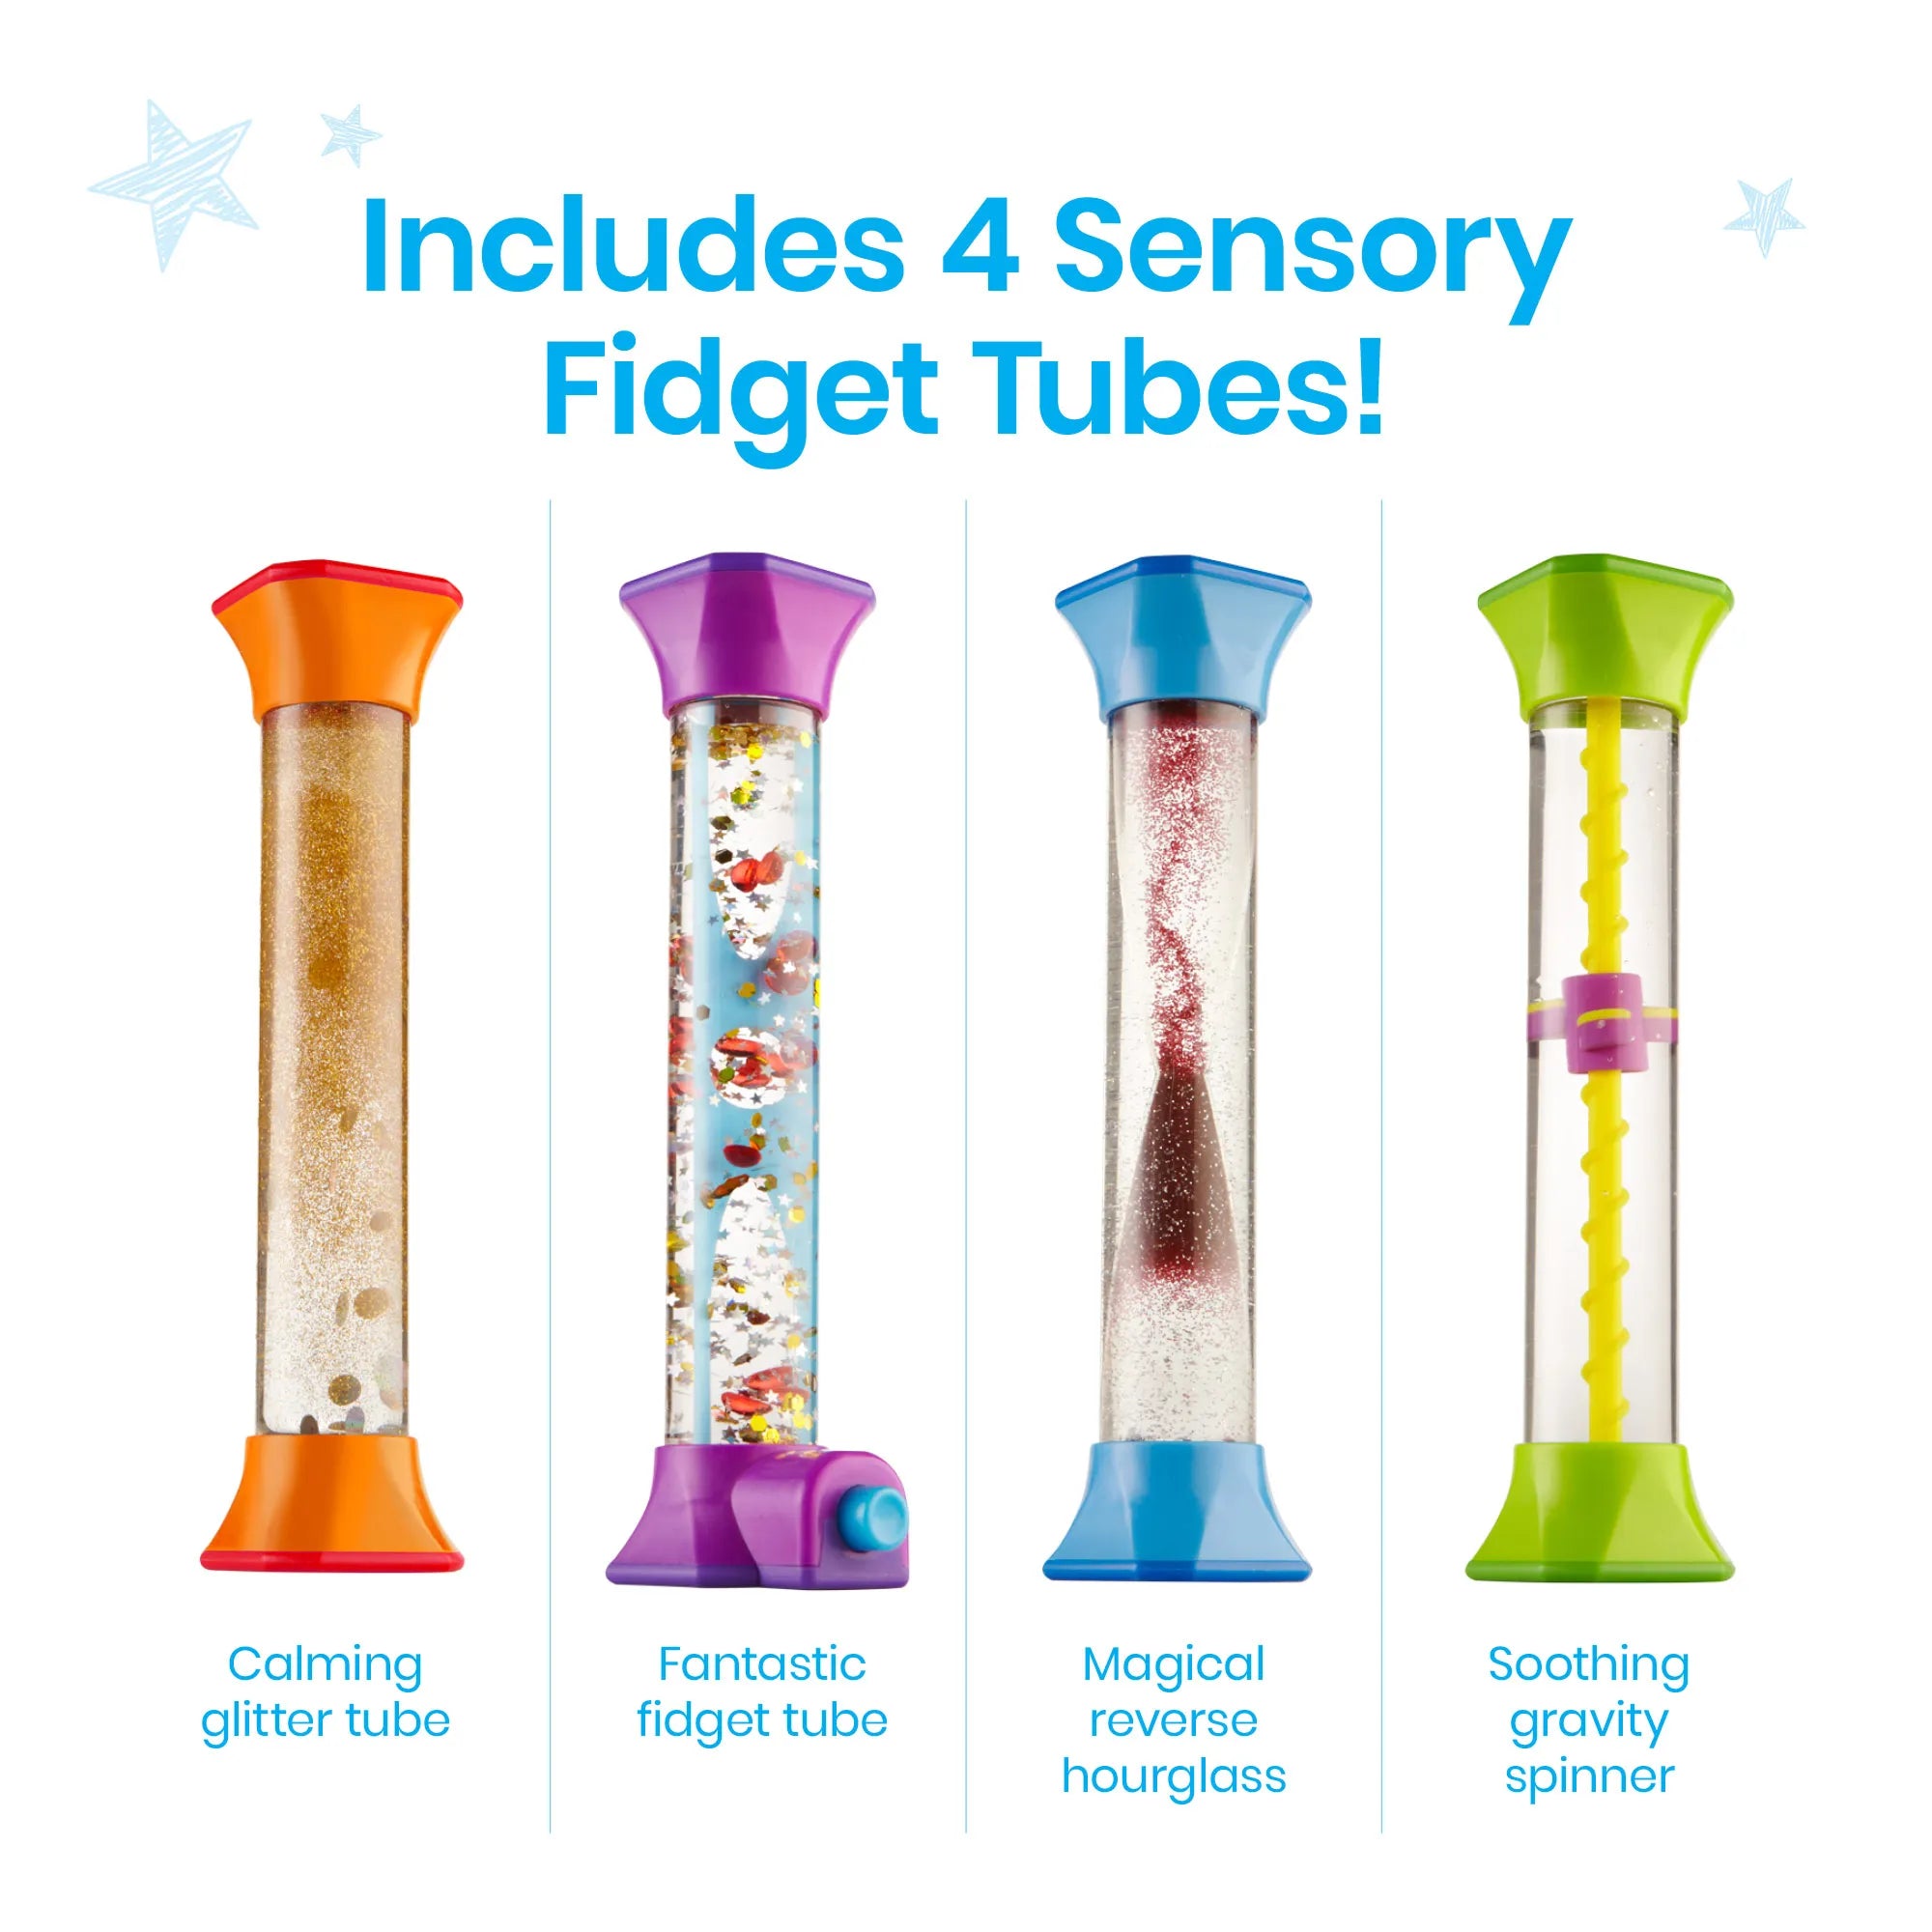 The four Sensory Fidget Tubes: Calming glitter tube, Fantastic fidget tube, Magical reverse hourglass, and the Soothing gravity spinner.